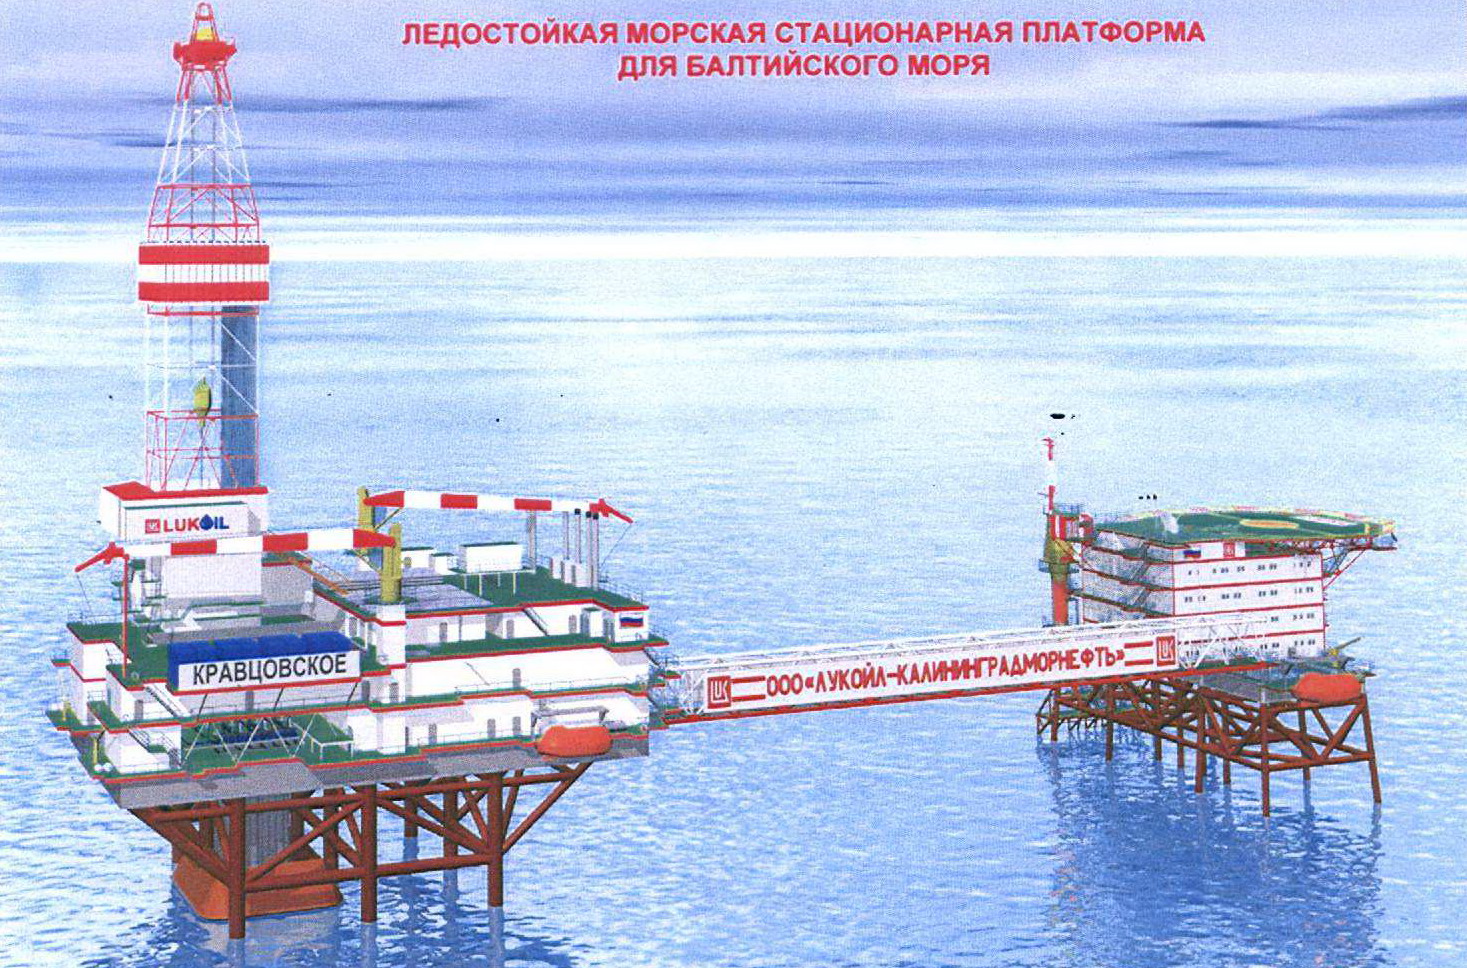 Oil drilling platform, Siberia